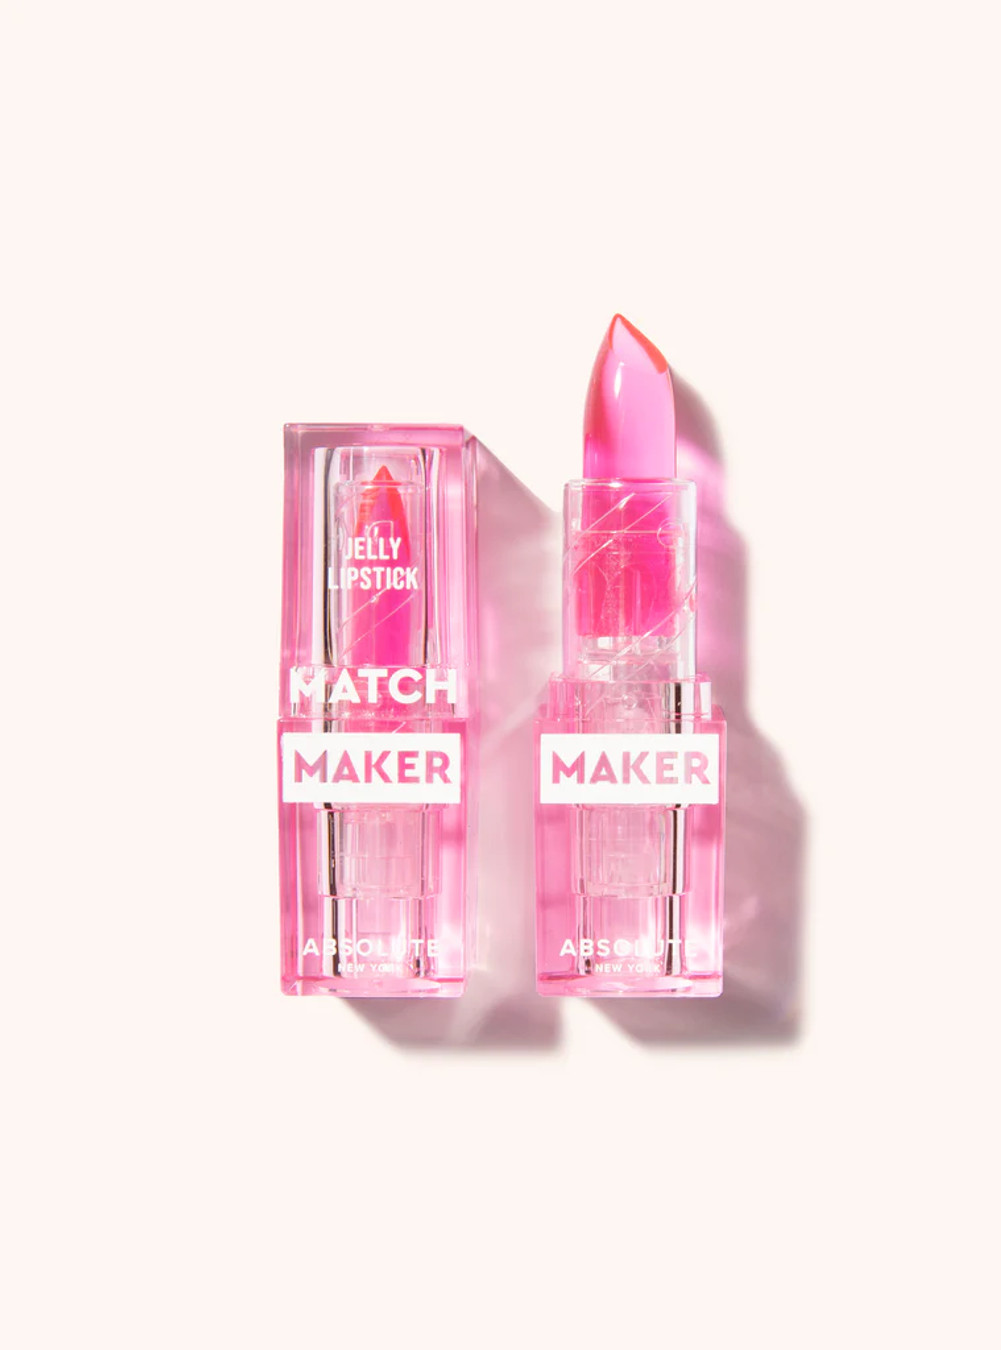 ABSOLUTE Match Maker Jelly Lipstick